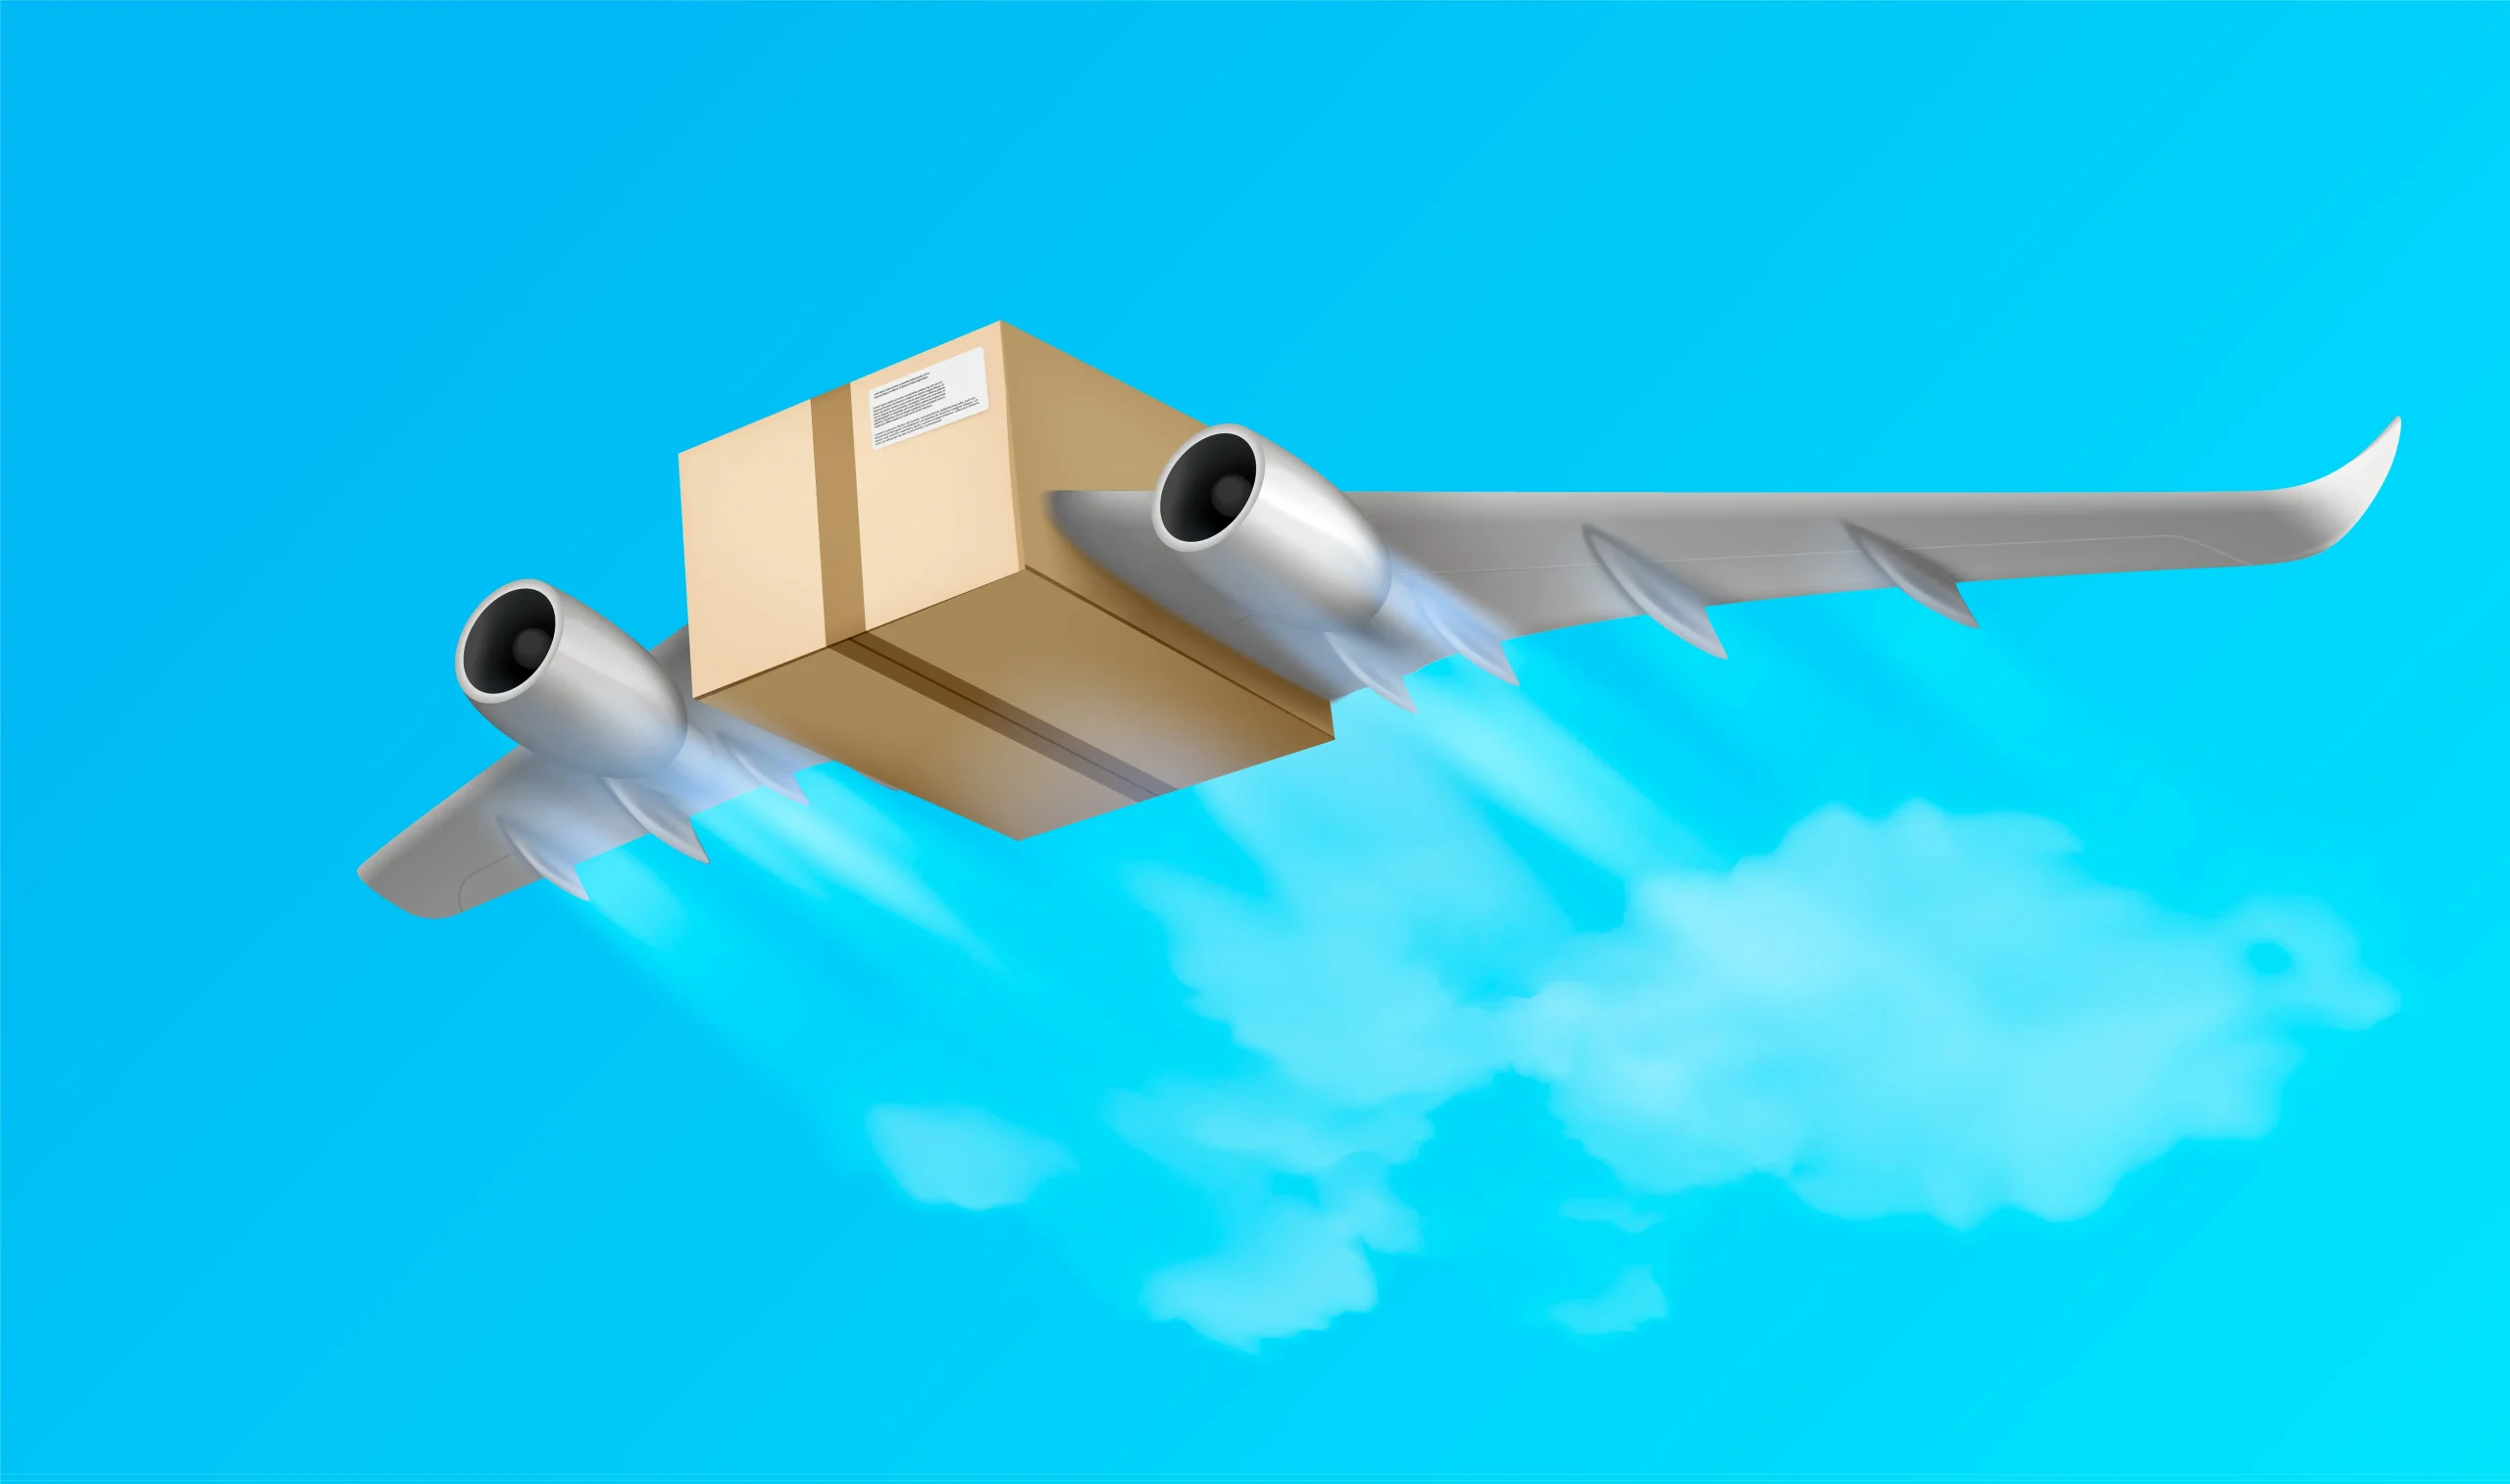 Air freight plane transporting cargo handling